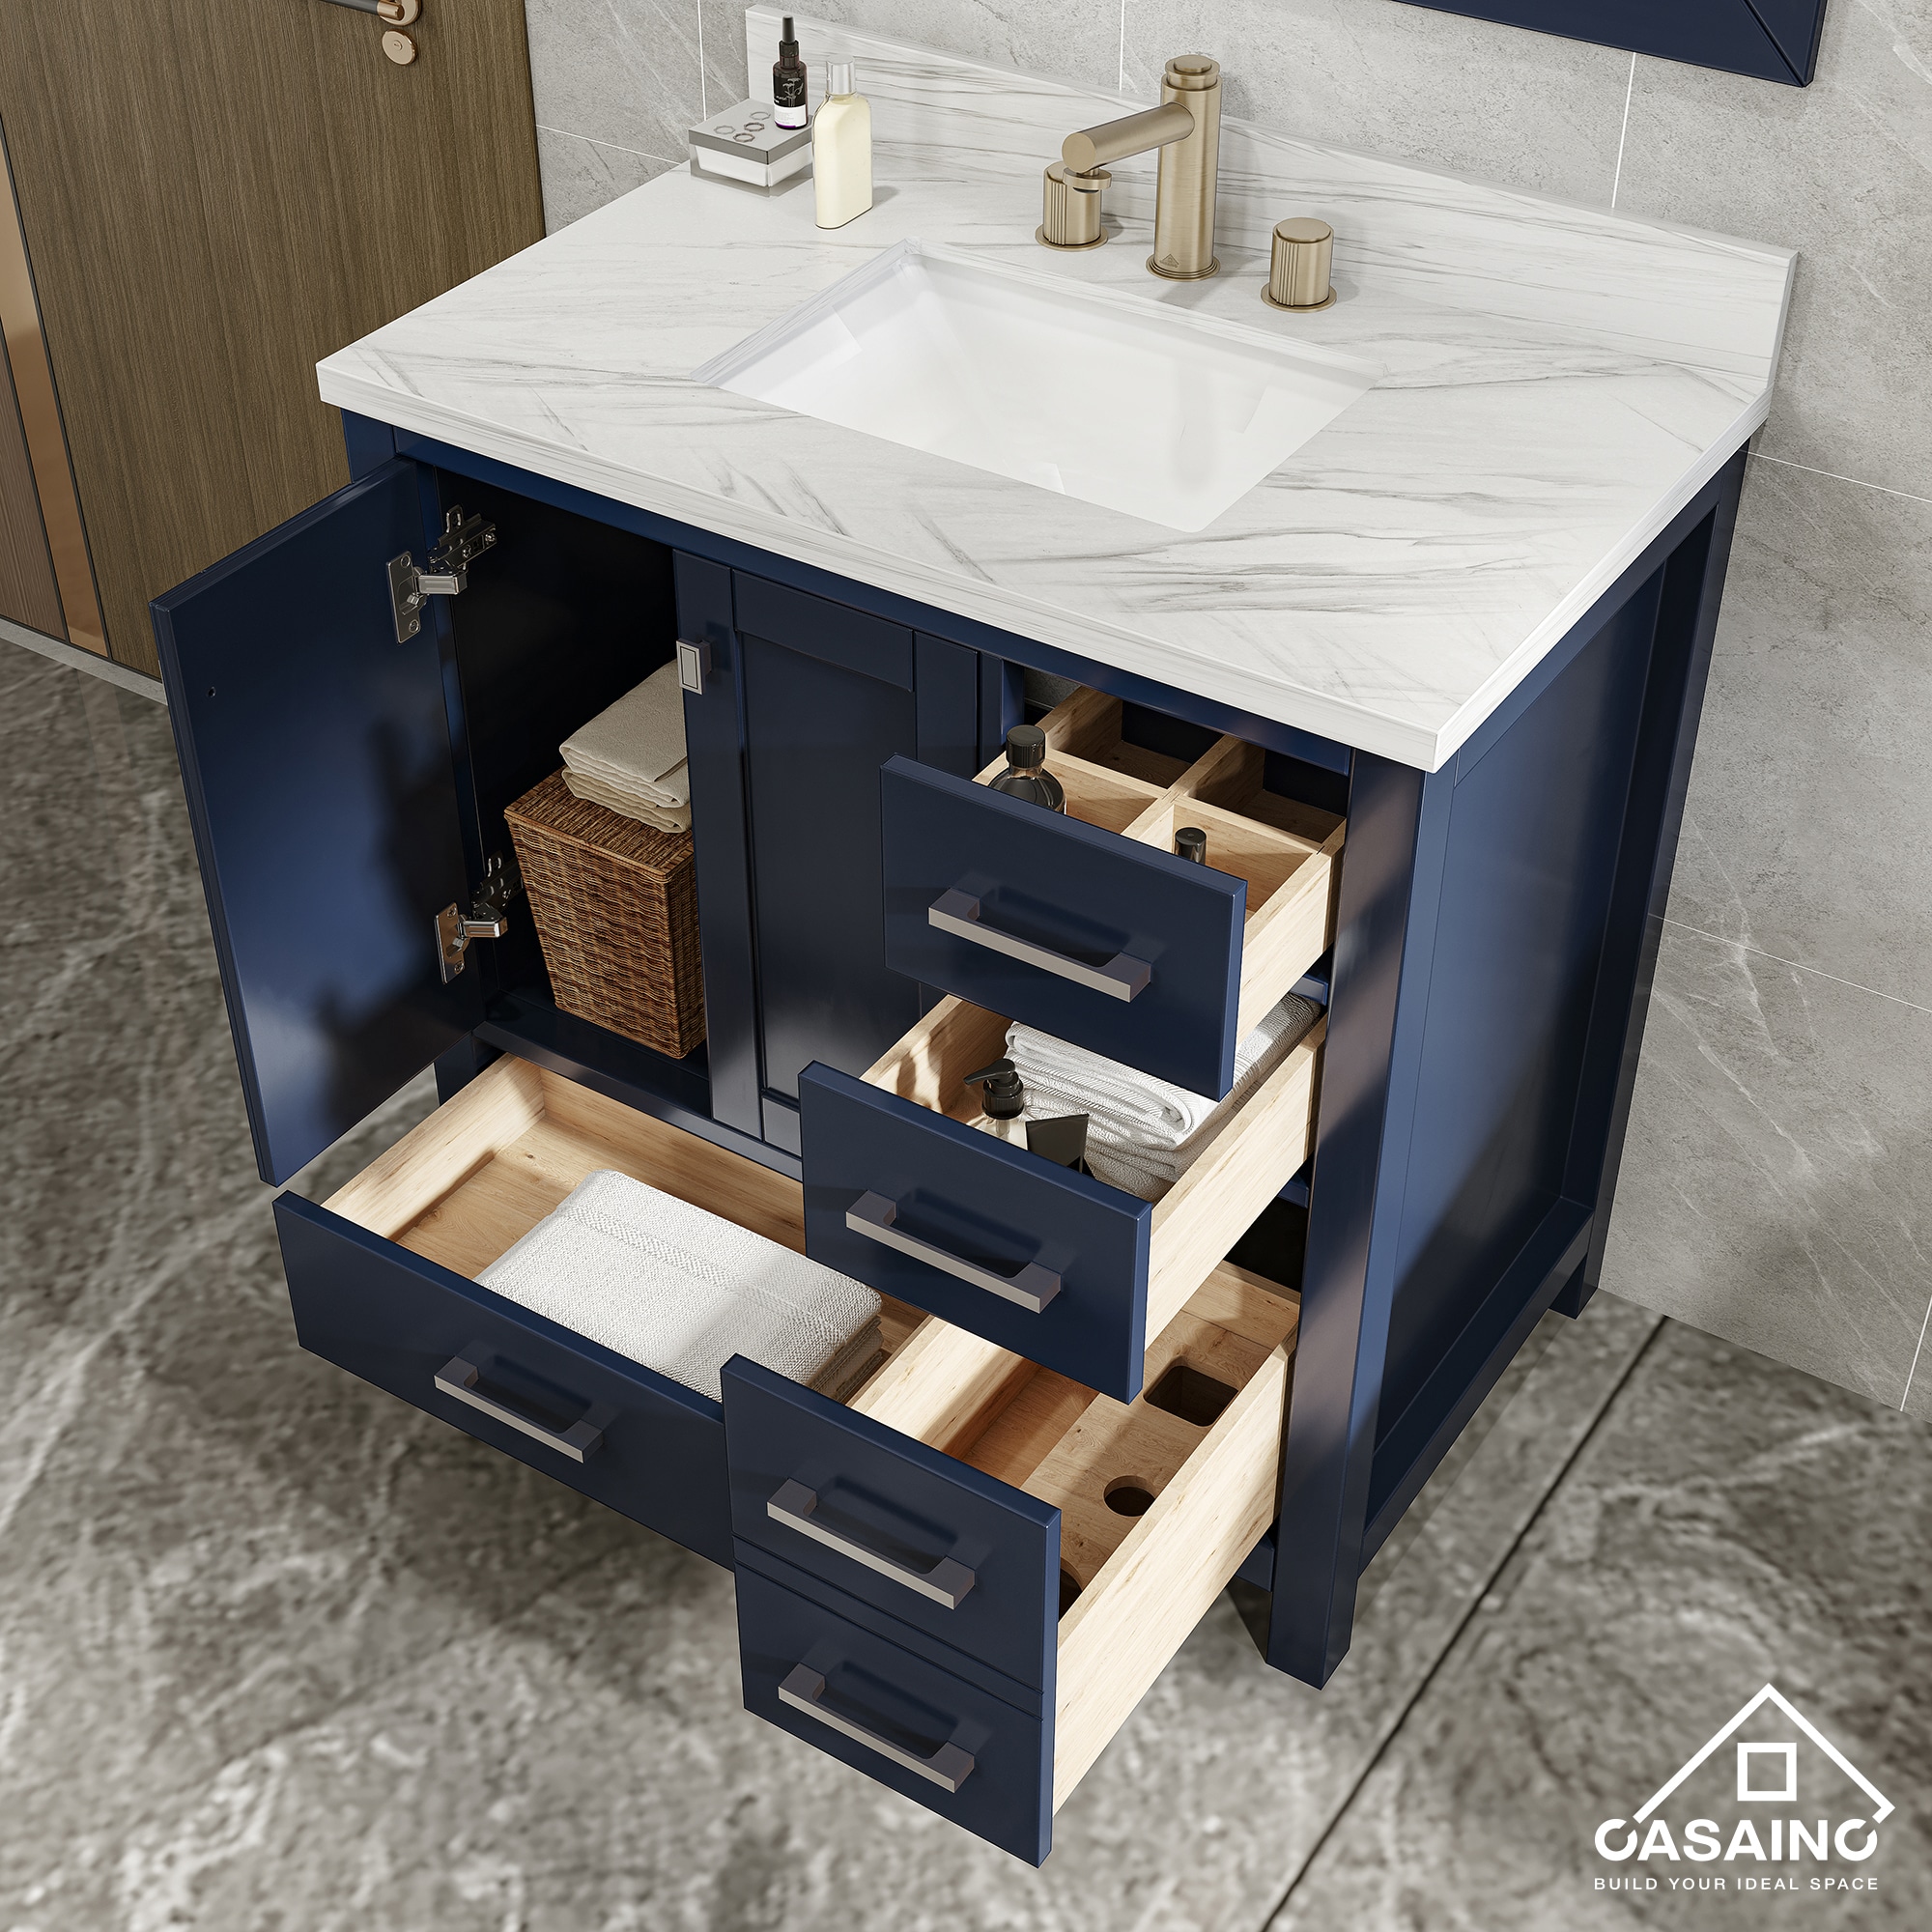 CASAINC 36-in Dark Blue Undermount Single Sink Bathroom Vanity with ...